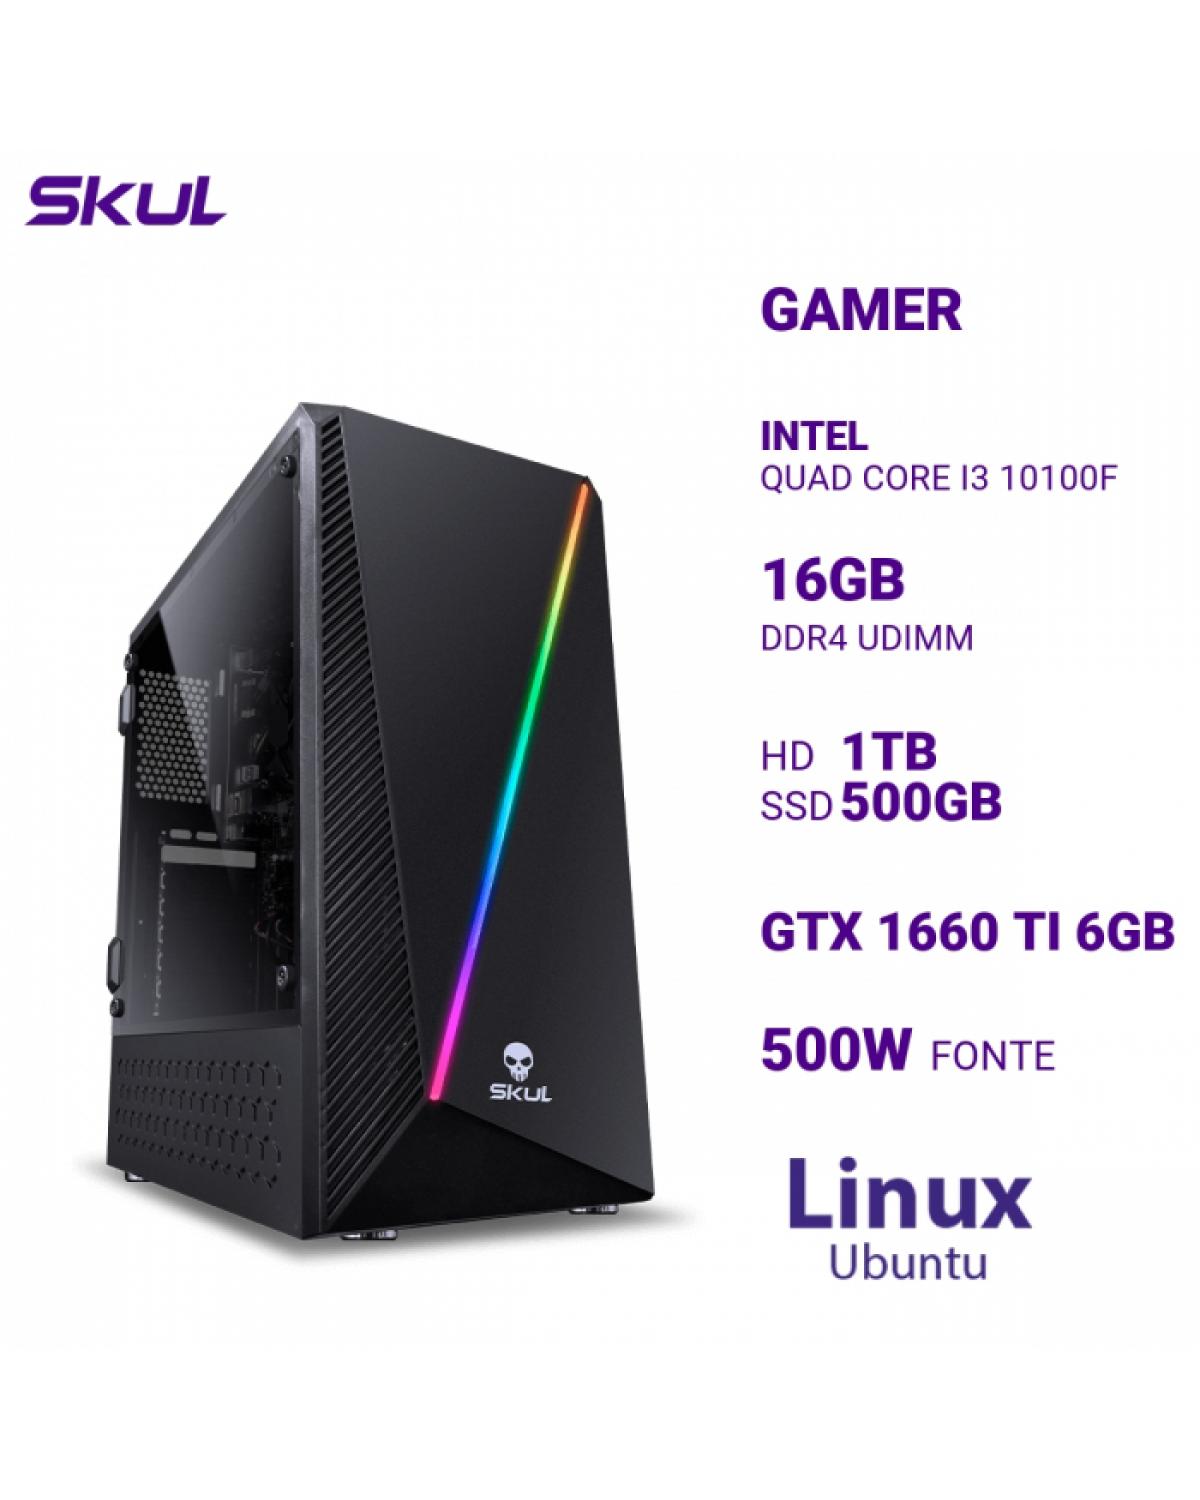 COMPUTADOR GAMER 3000 QUAD CORE I3 10100F MEM 16GB DDR4 HD 1TB SSD 500GB NVME GTX 1660 TI 6GB FONTE 500W LINUX